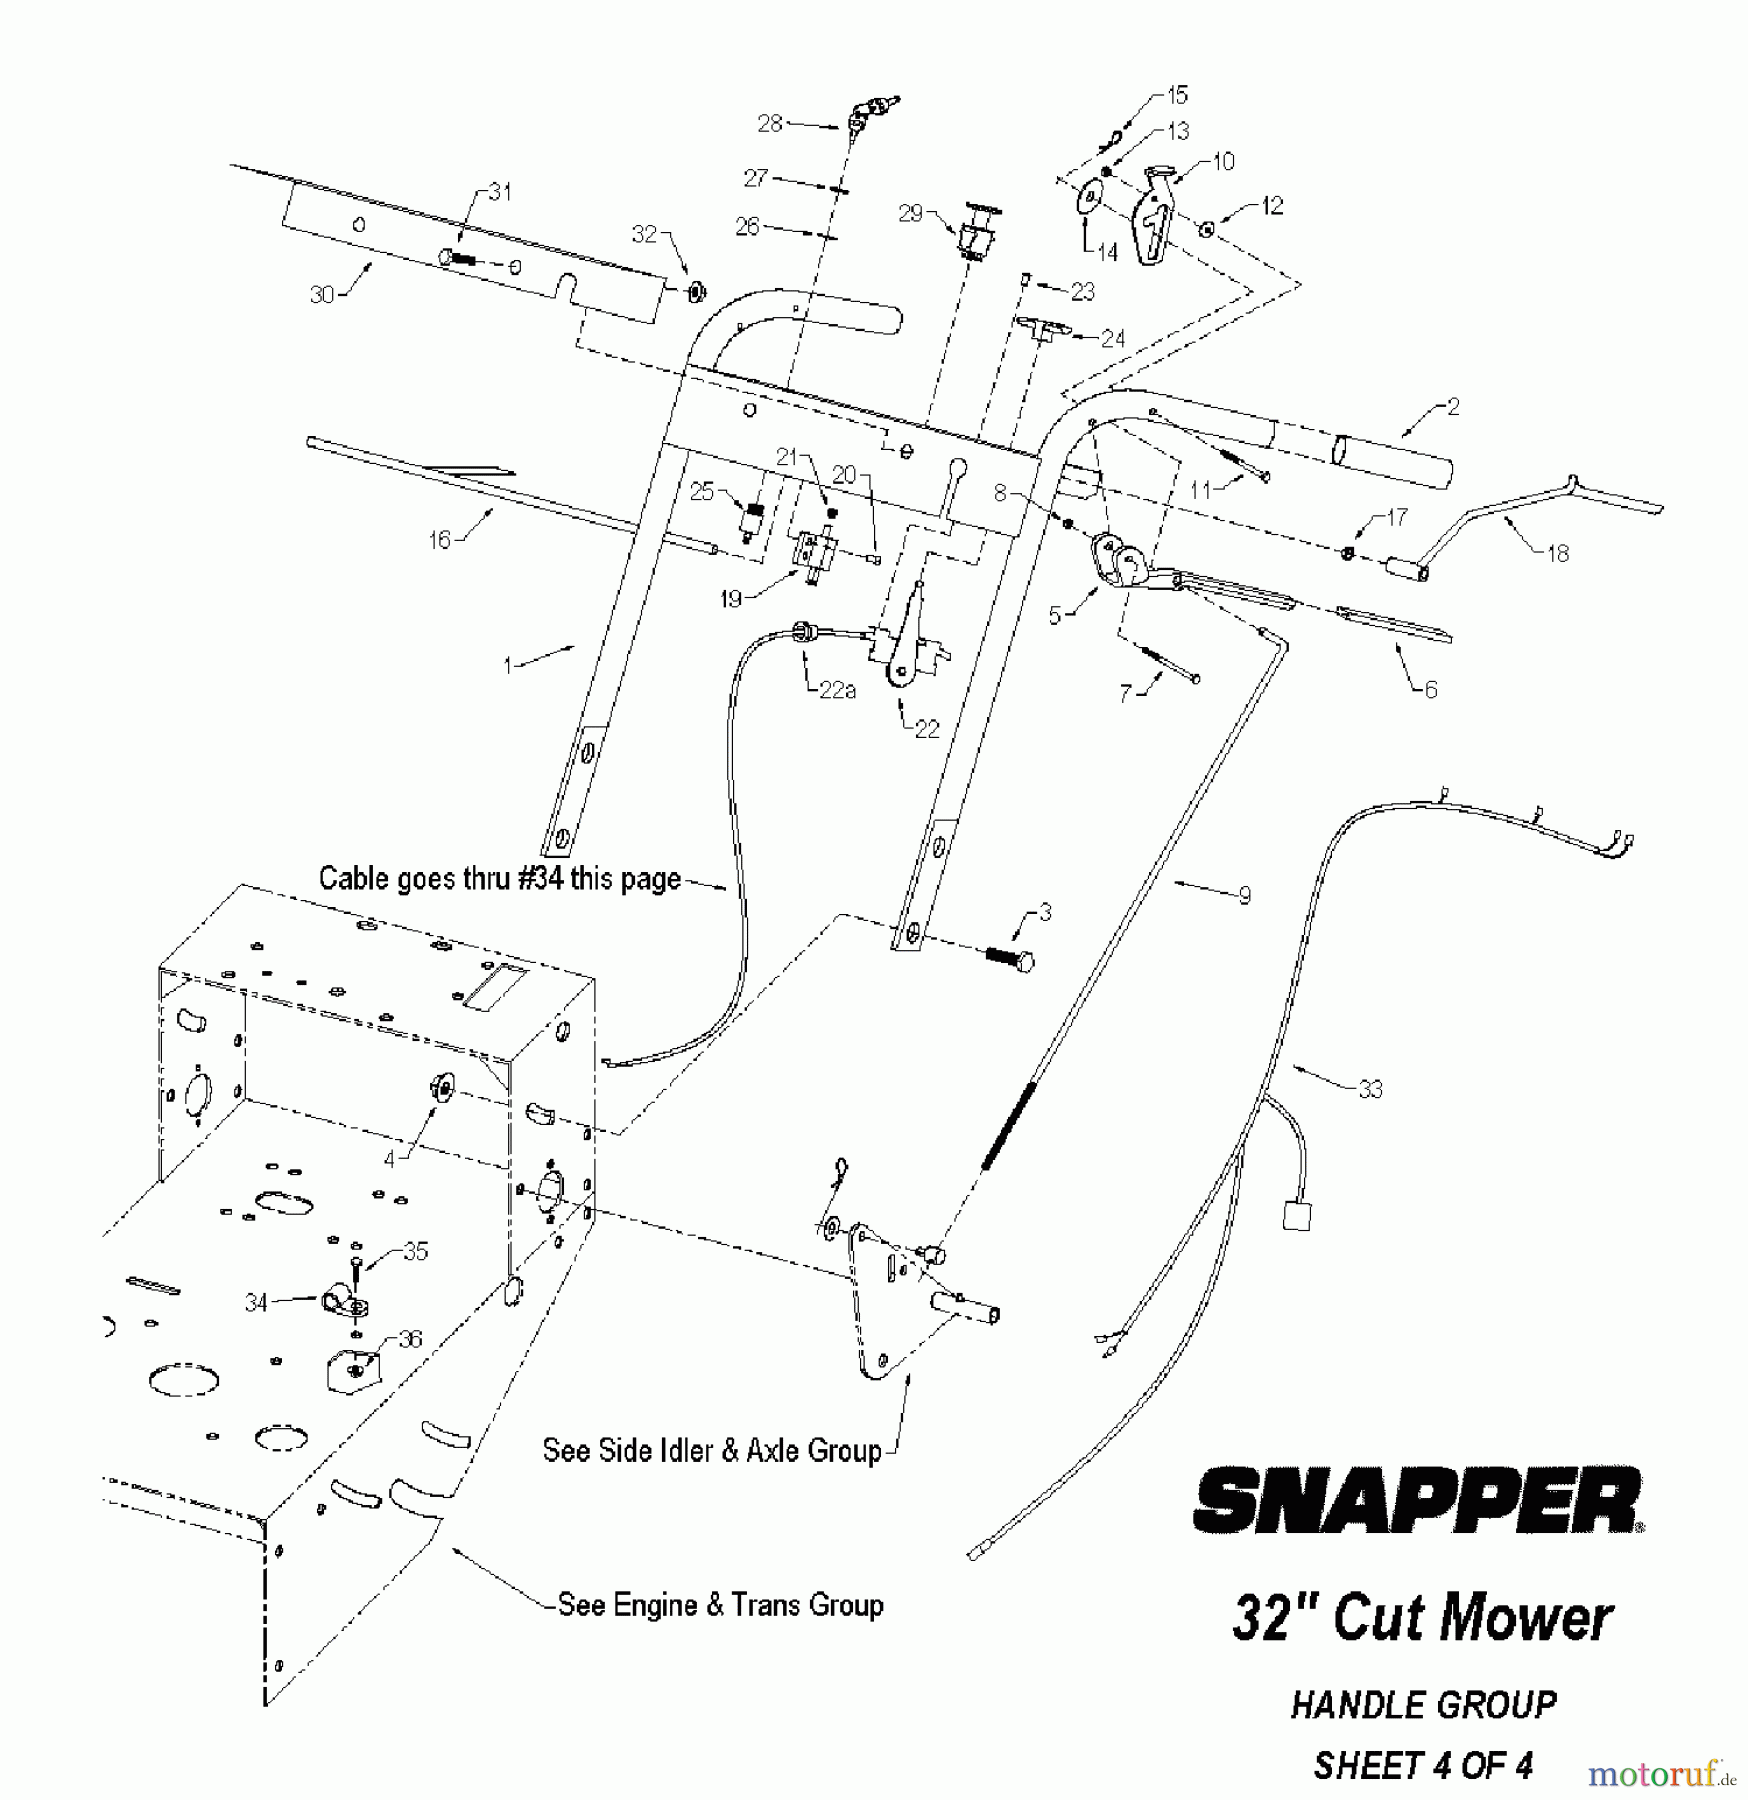  Snapper Rasenmäher für Großflächen SGV13320KW - Snapper 32